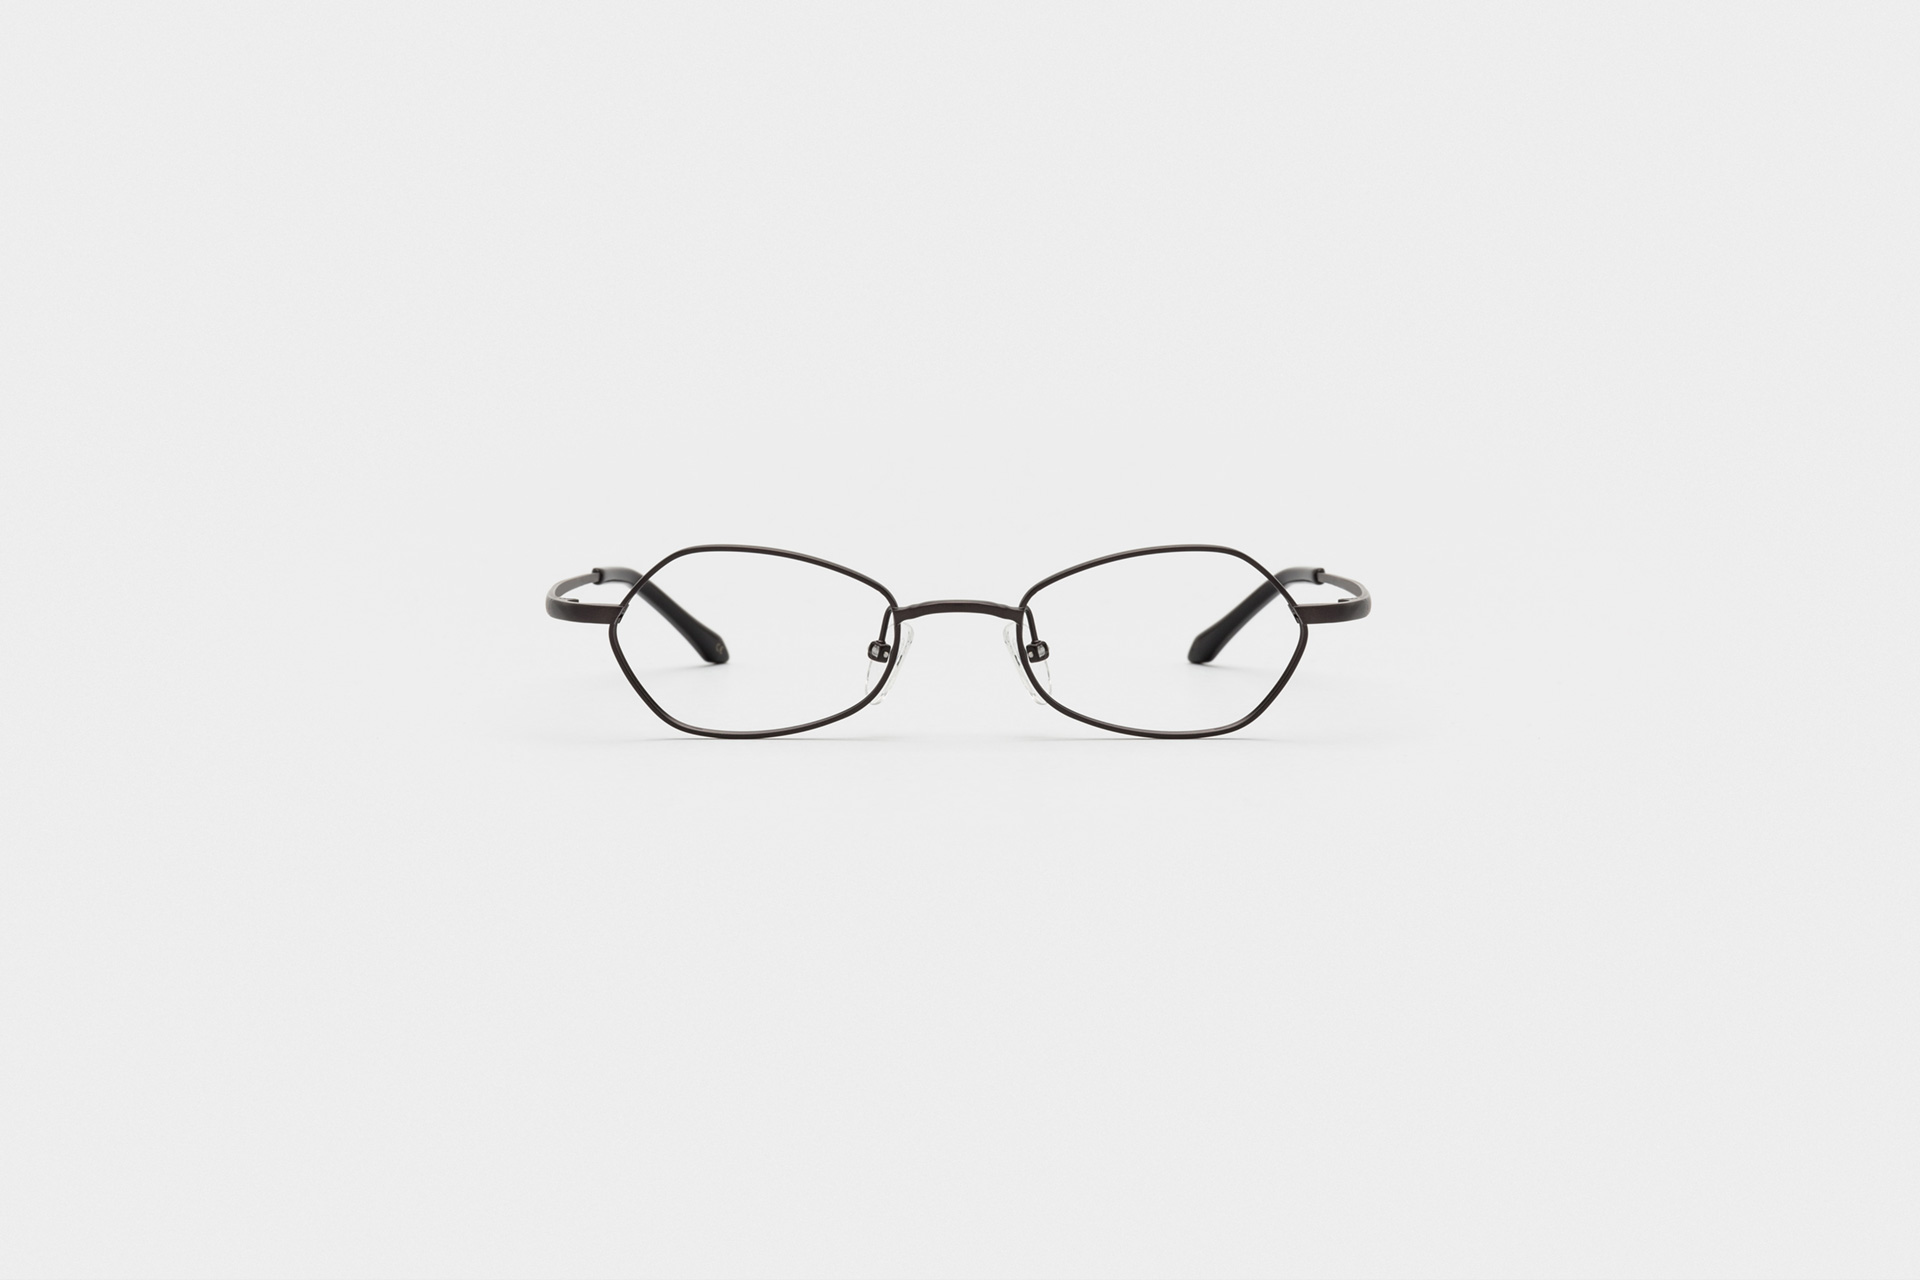 Alfred Kerbs Glasses